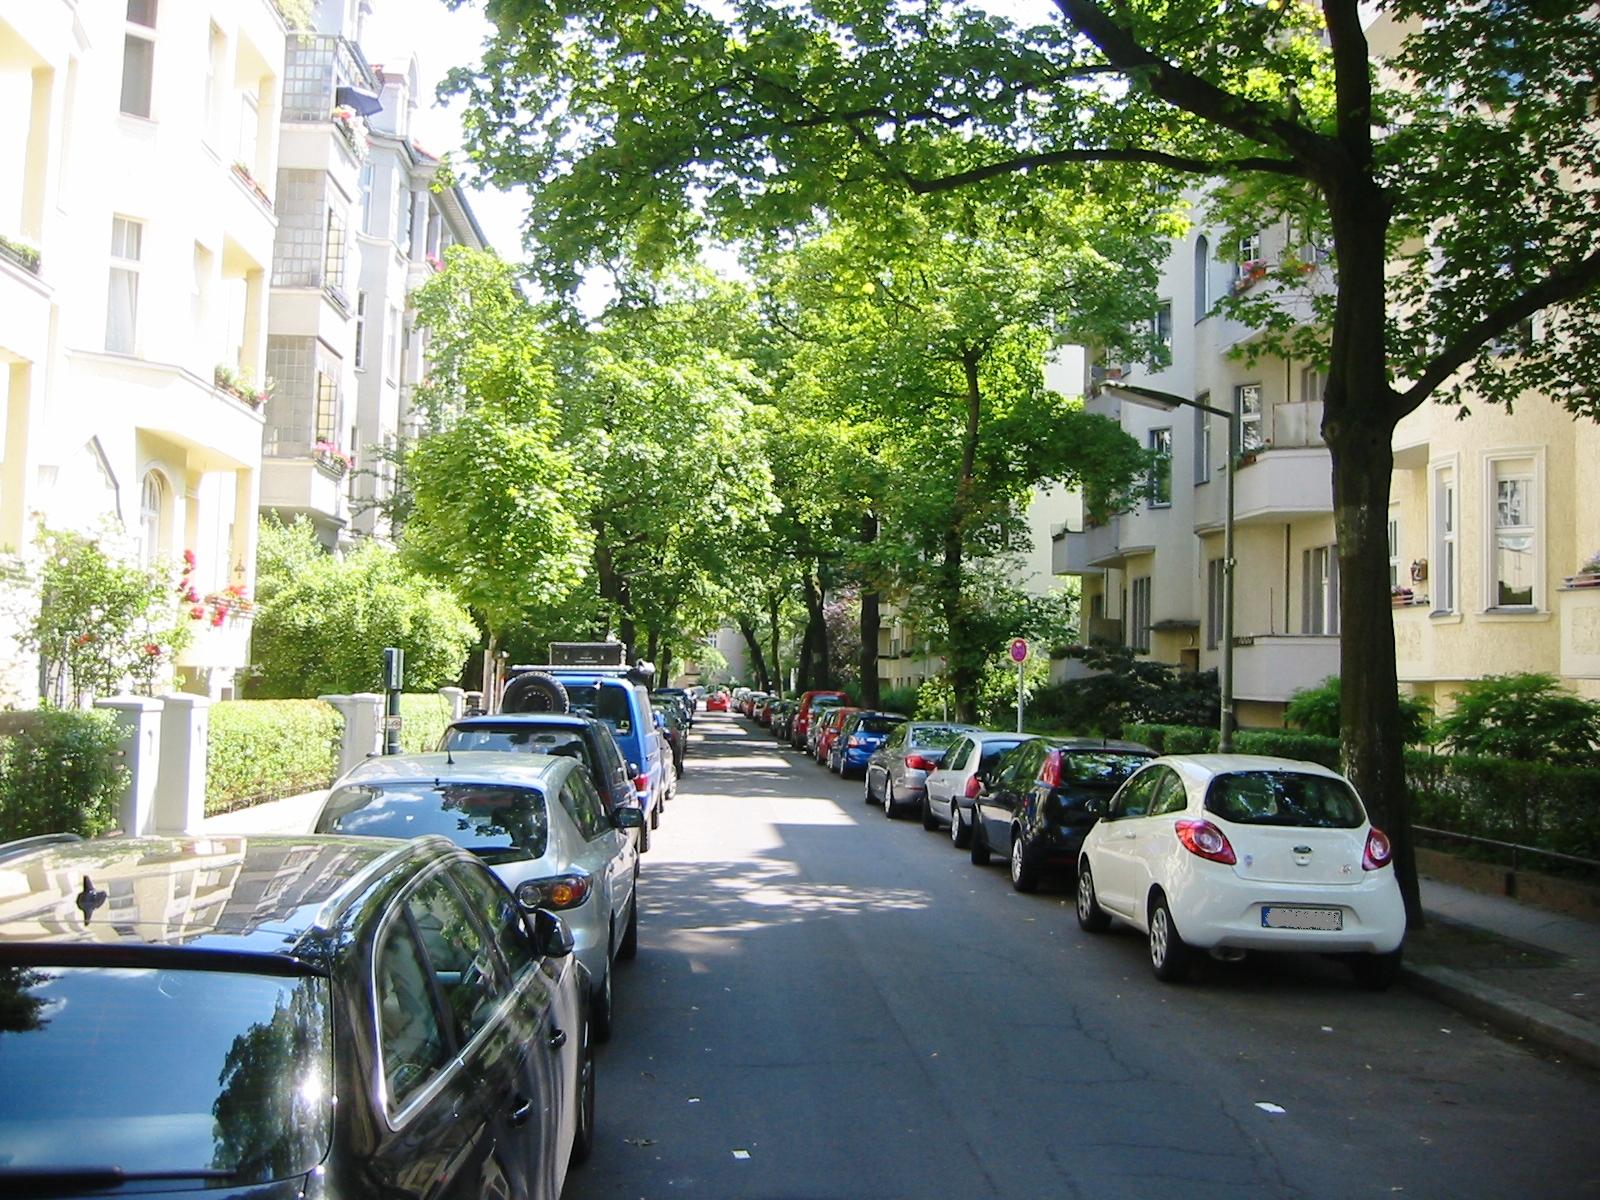 File:Berlin-Friedenau Deidesheimer Straße.jpg - Wikimedia Commons